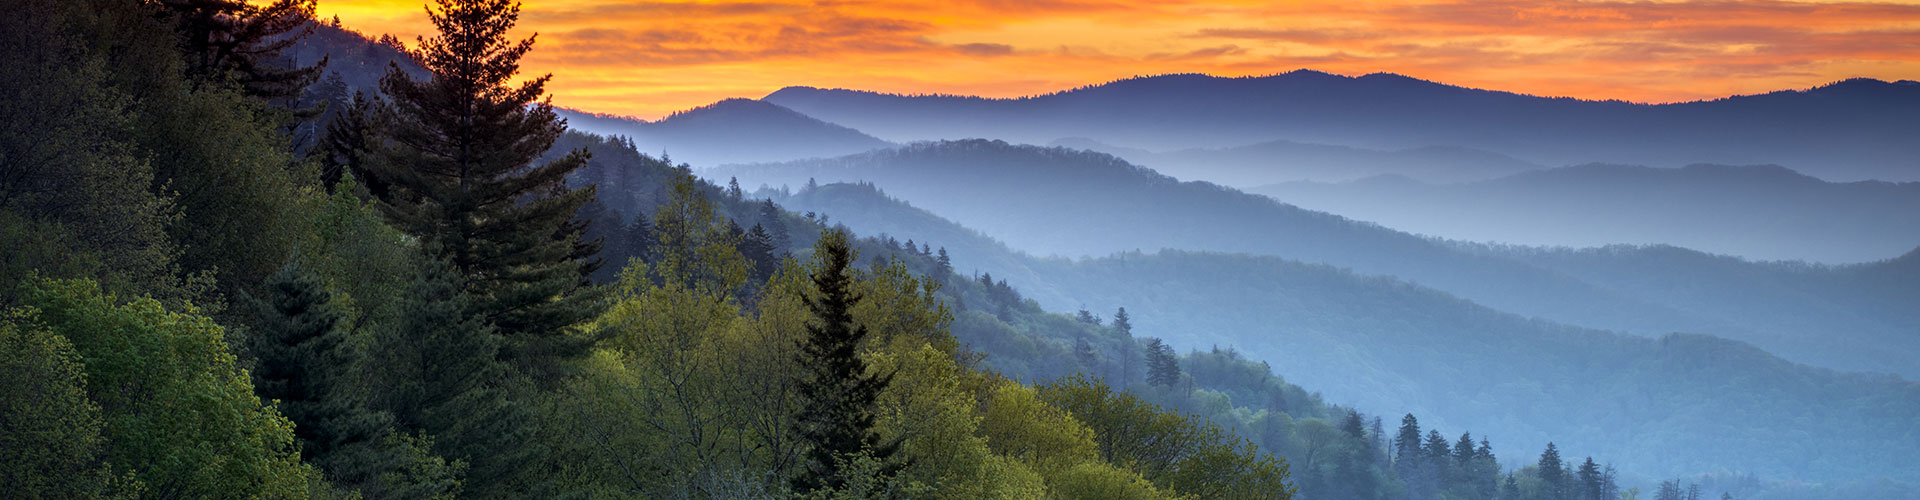 Great Smoky Mountains National Park Scenic Sunrise Landscape at Oconaluftee Overlook between Cherokee NC and Gatlinburg TN